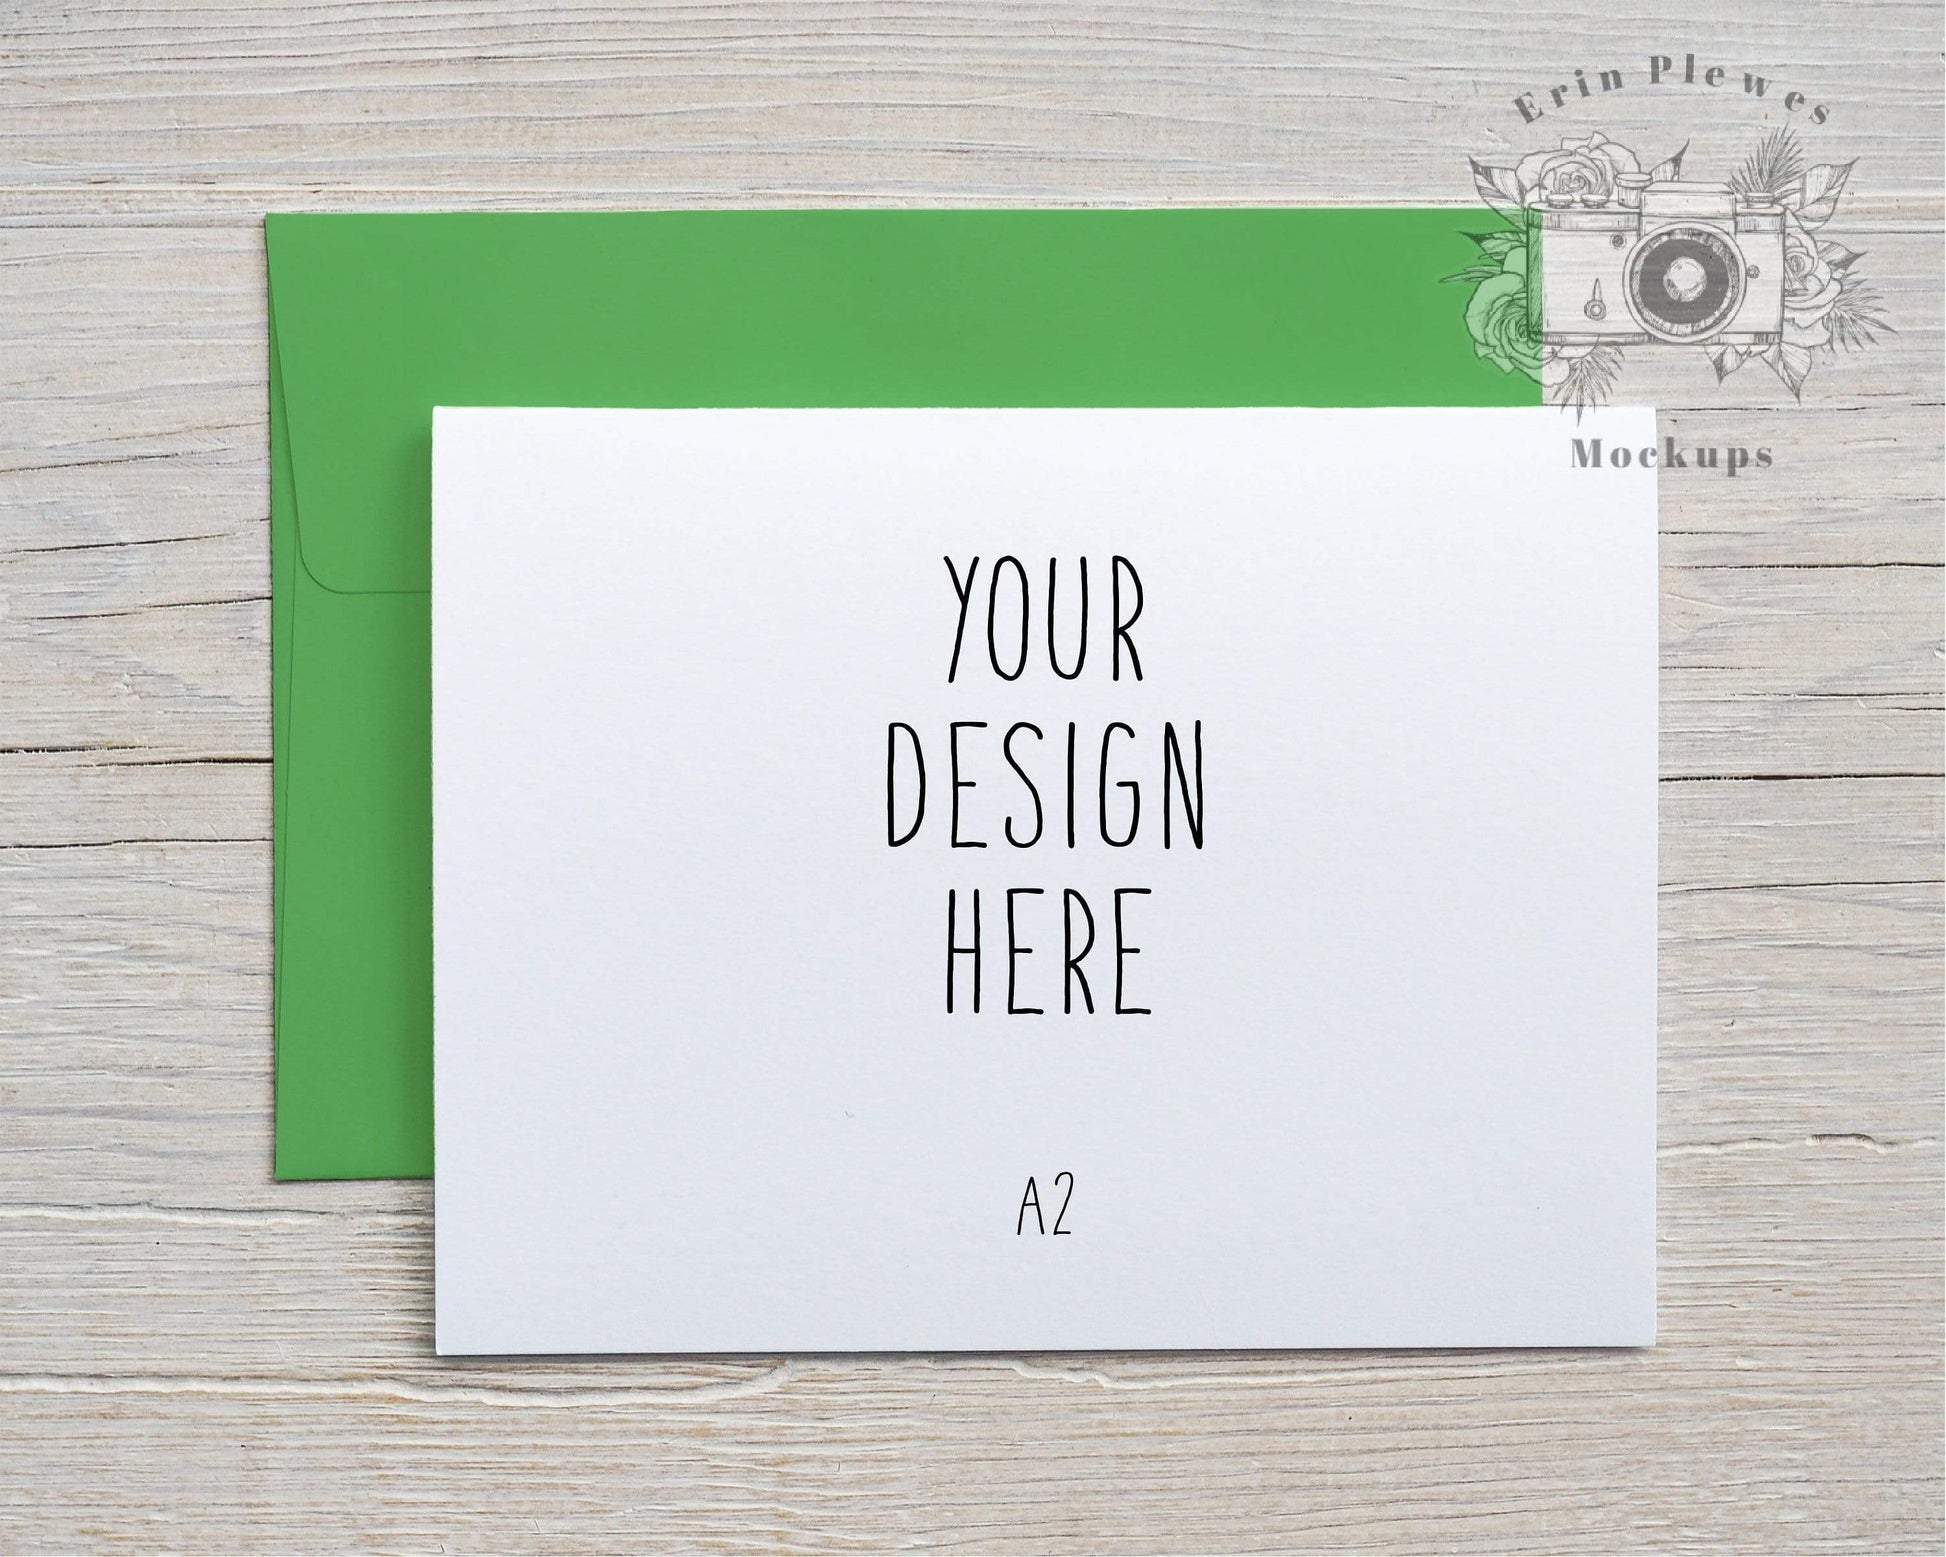 Erin Plewes Mockups A2 Card mockup with bright green envelope, Thank you card and envelope mock up, Birthday card mock-up, Jpeg Instant Digital Download